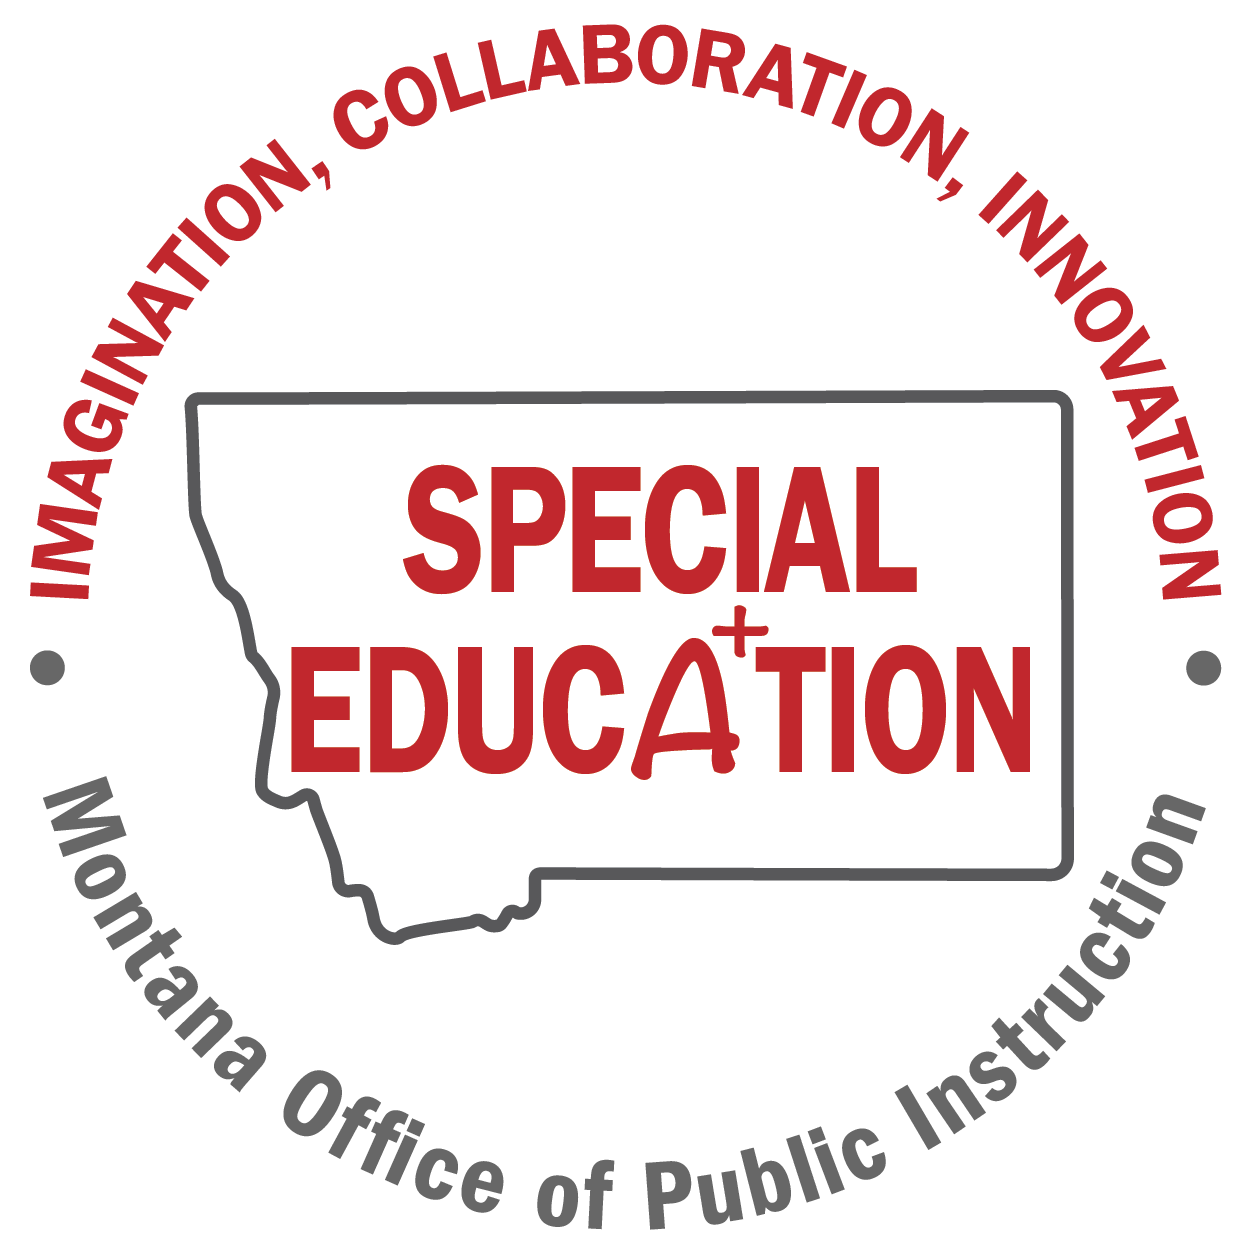 Special Education logo